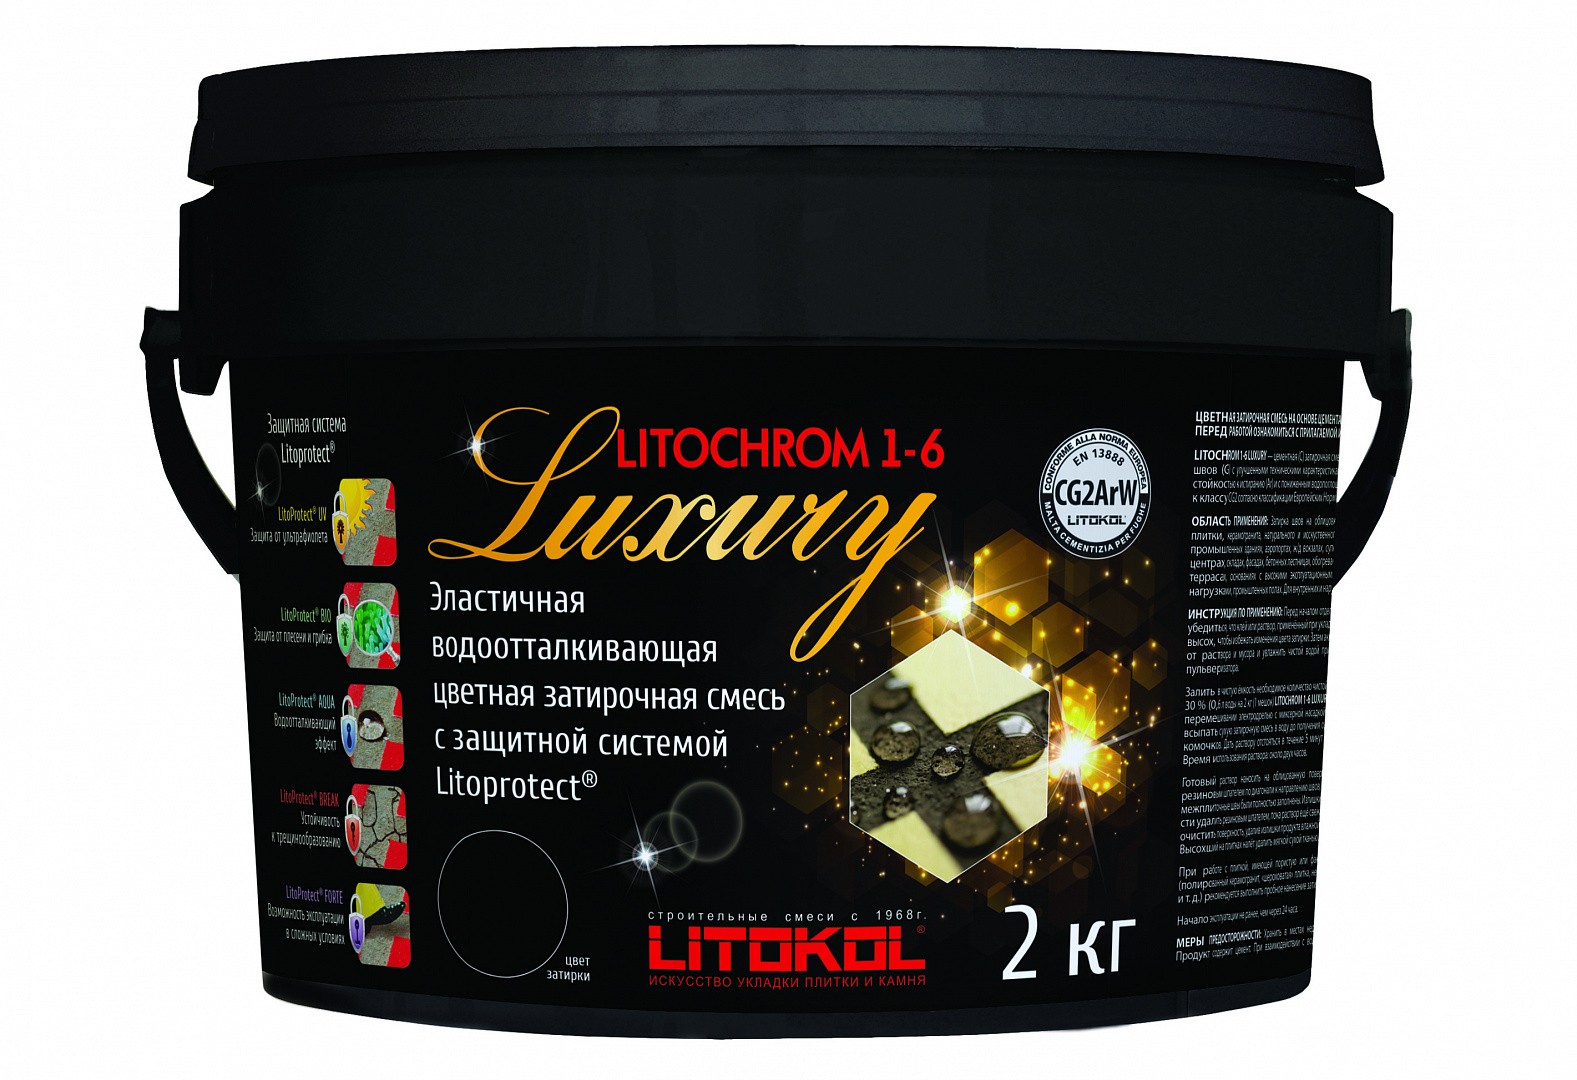 Цементная затирочная смесь LITOCHROM 1-6 LUXURY C.330